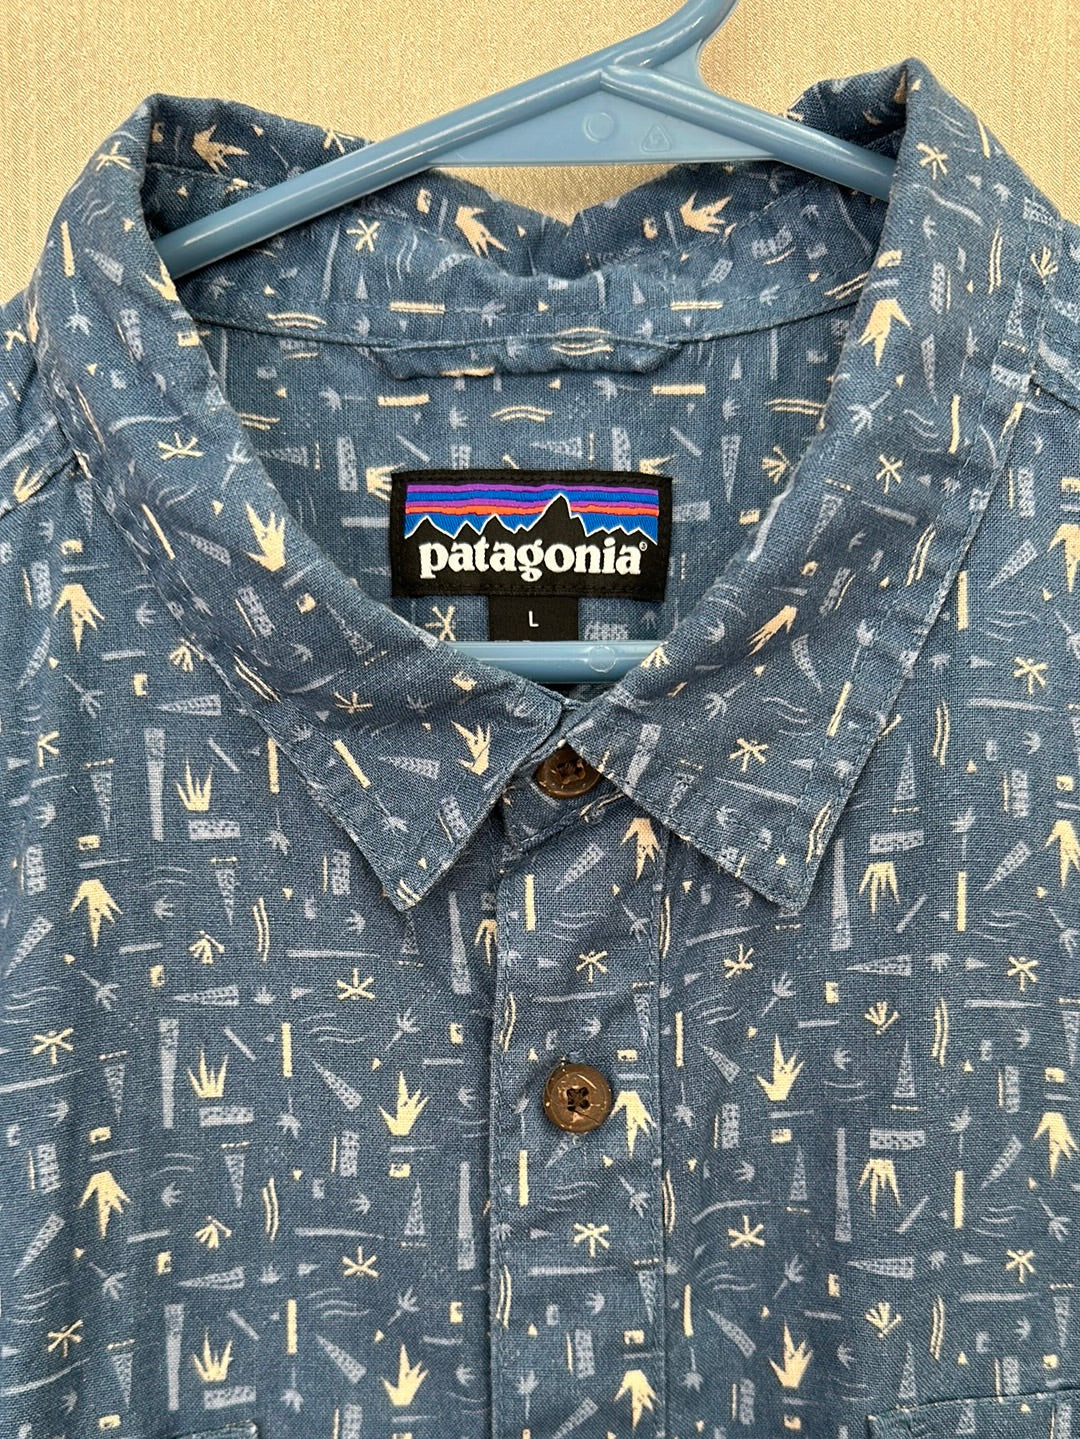 PATAGONIA blue print Hemp Organic Cotton Button Up Short Sleeve Shirt - L